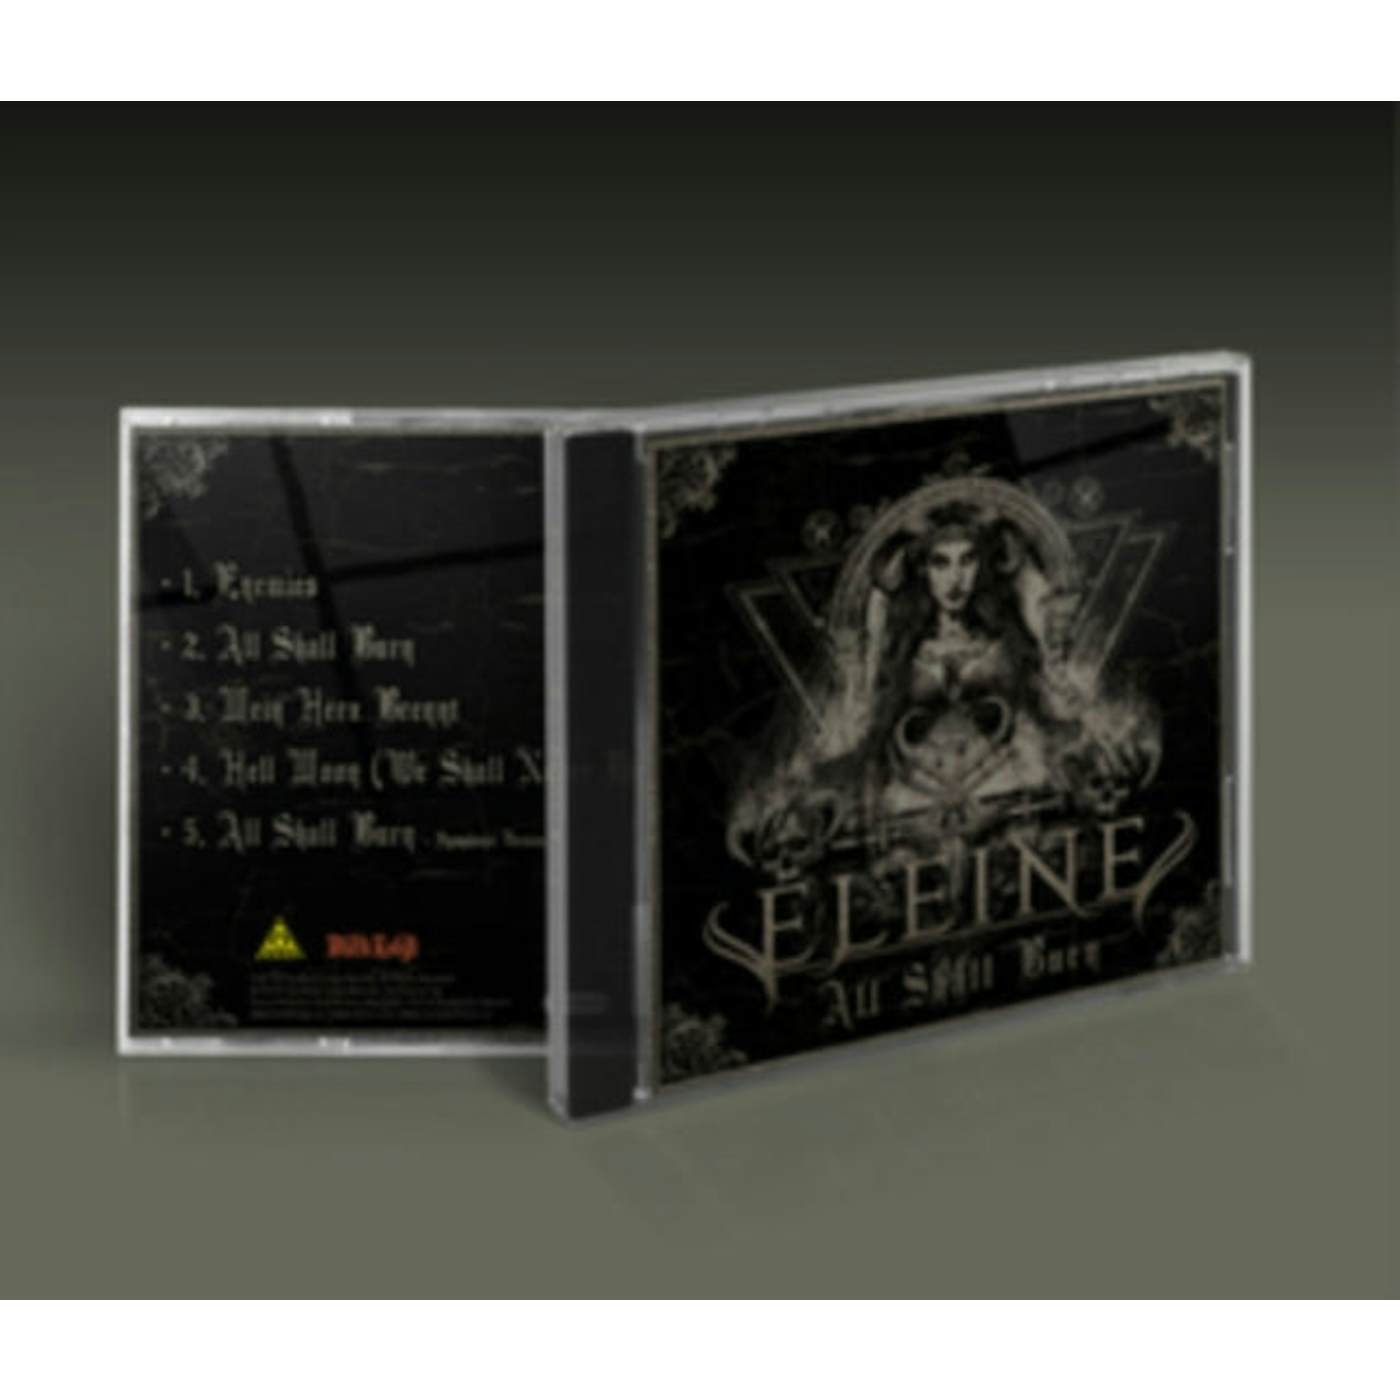 Eleine CD - All Shall Burn